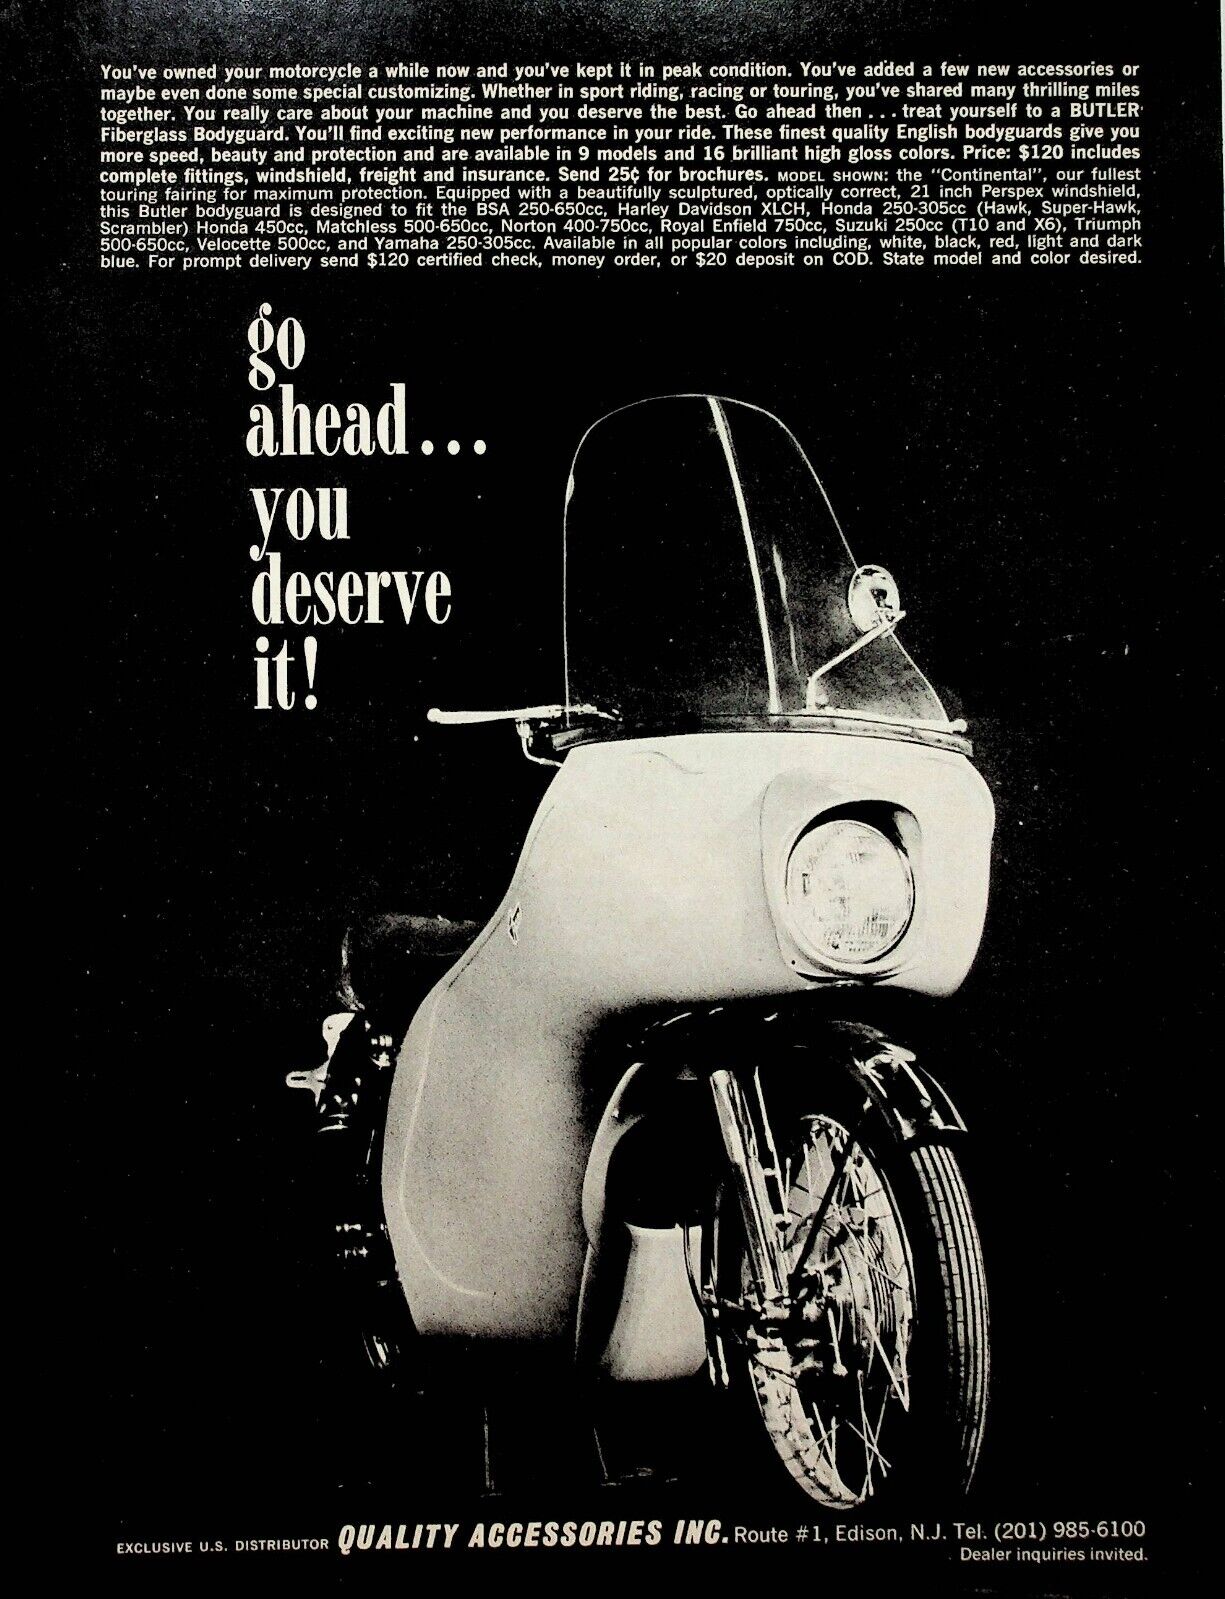 1966 Motorcycle Fairings Butler Fiberglass Bodyguard - Vintage Ad